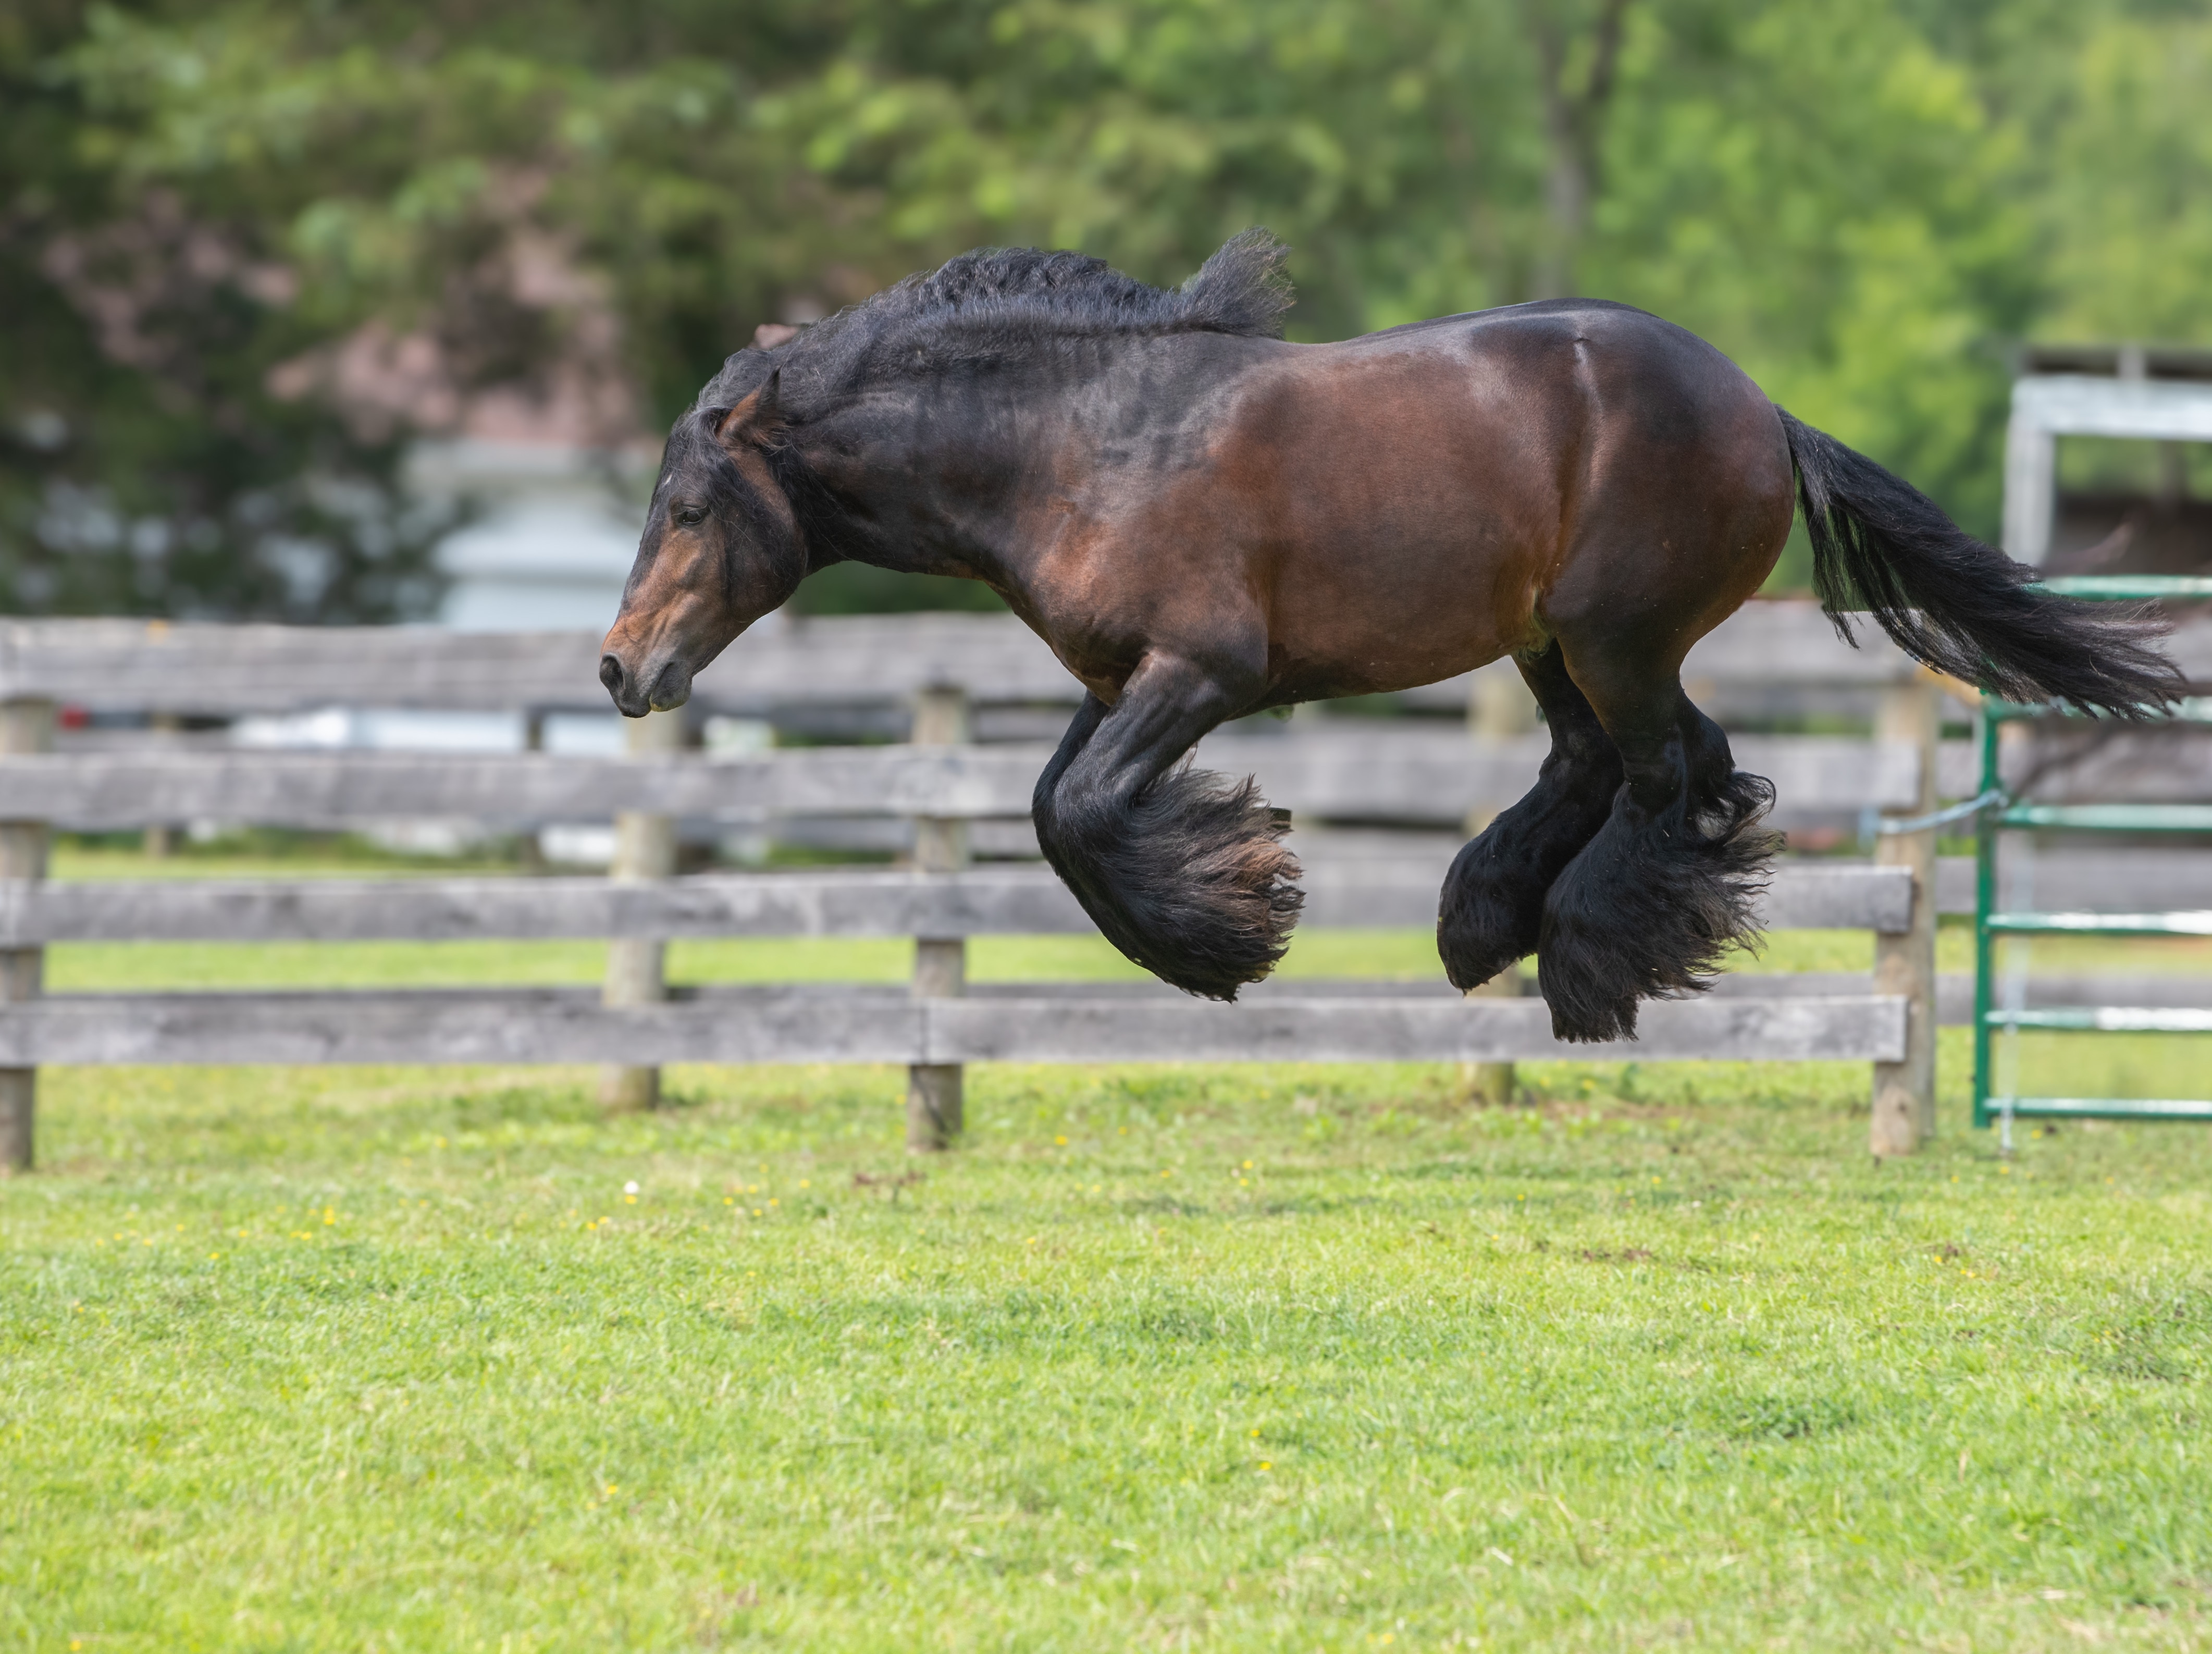 A brown horse leaping through the air